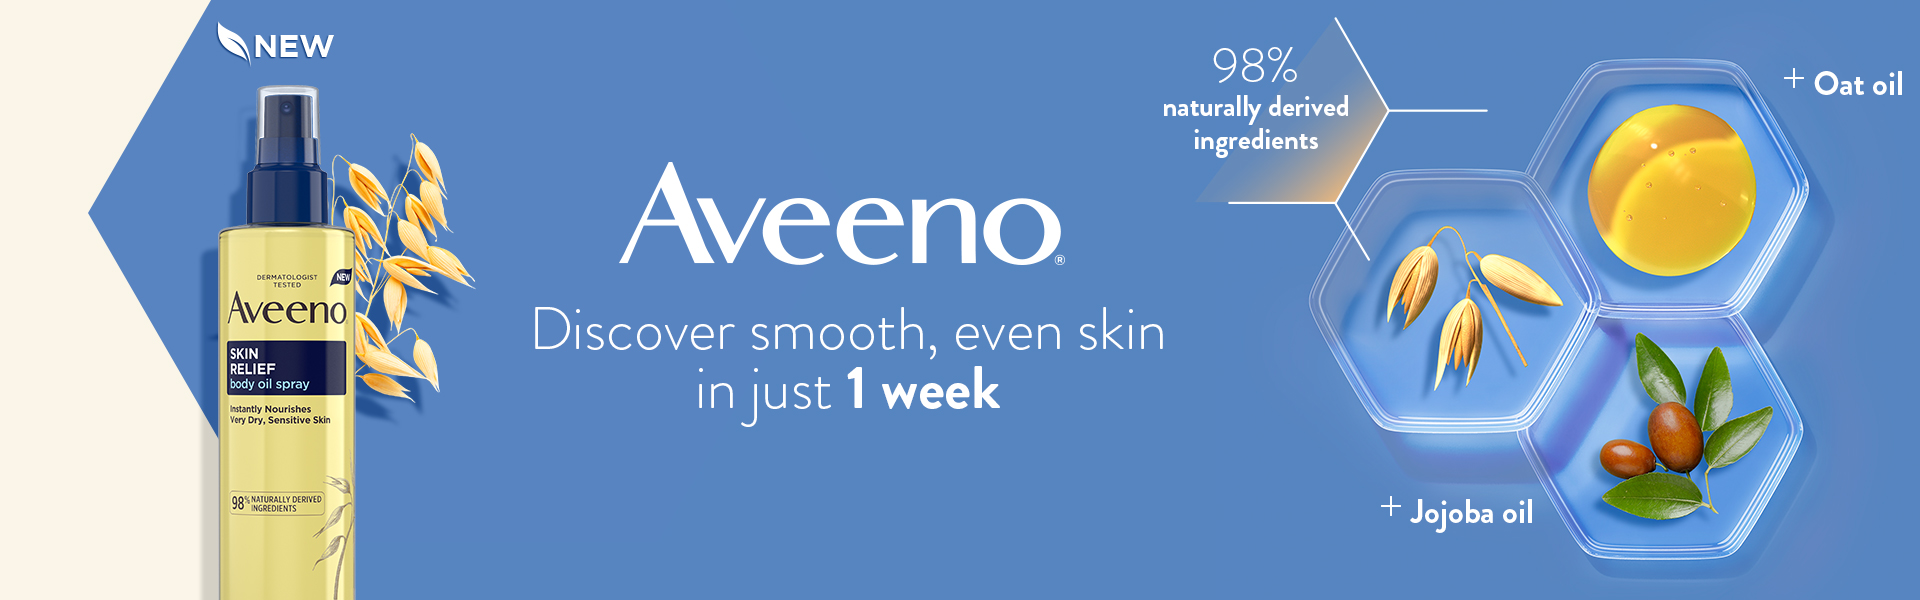 Aveeno smooth skin banner